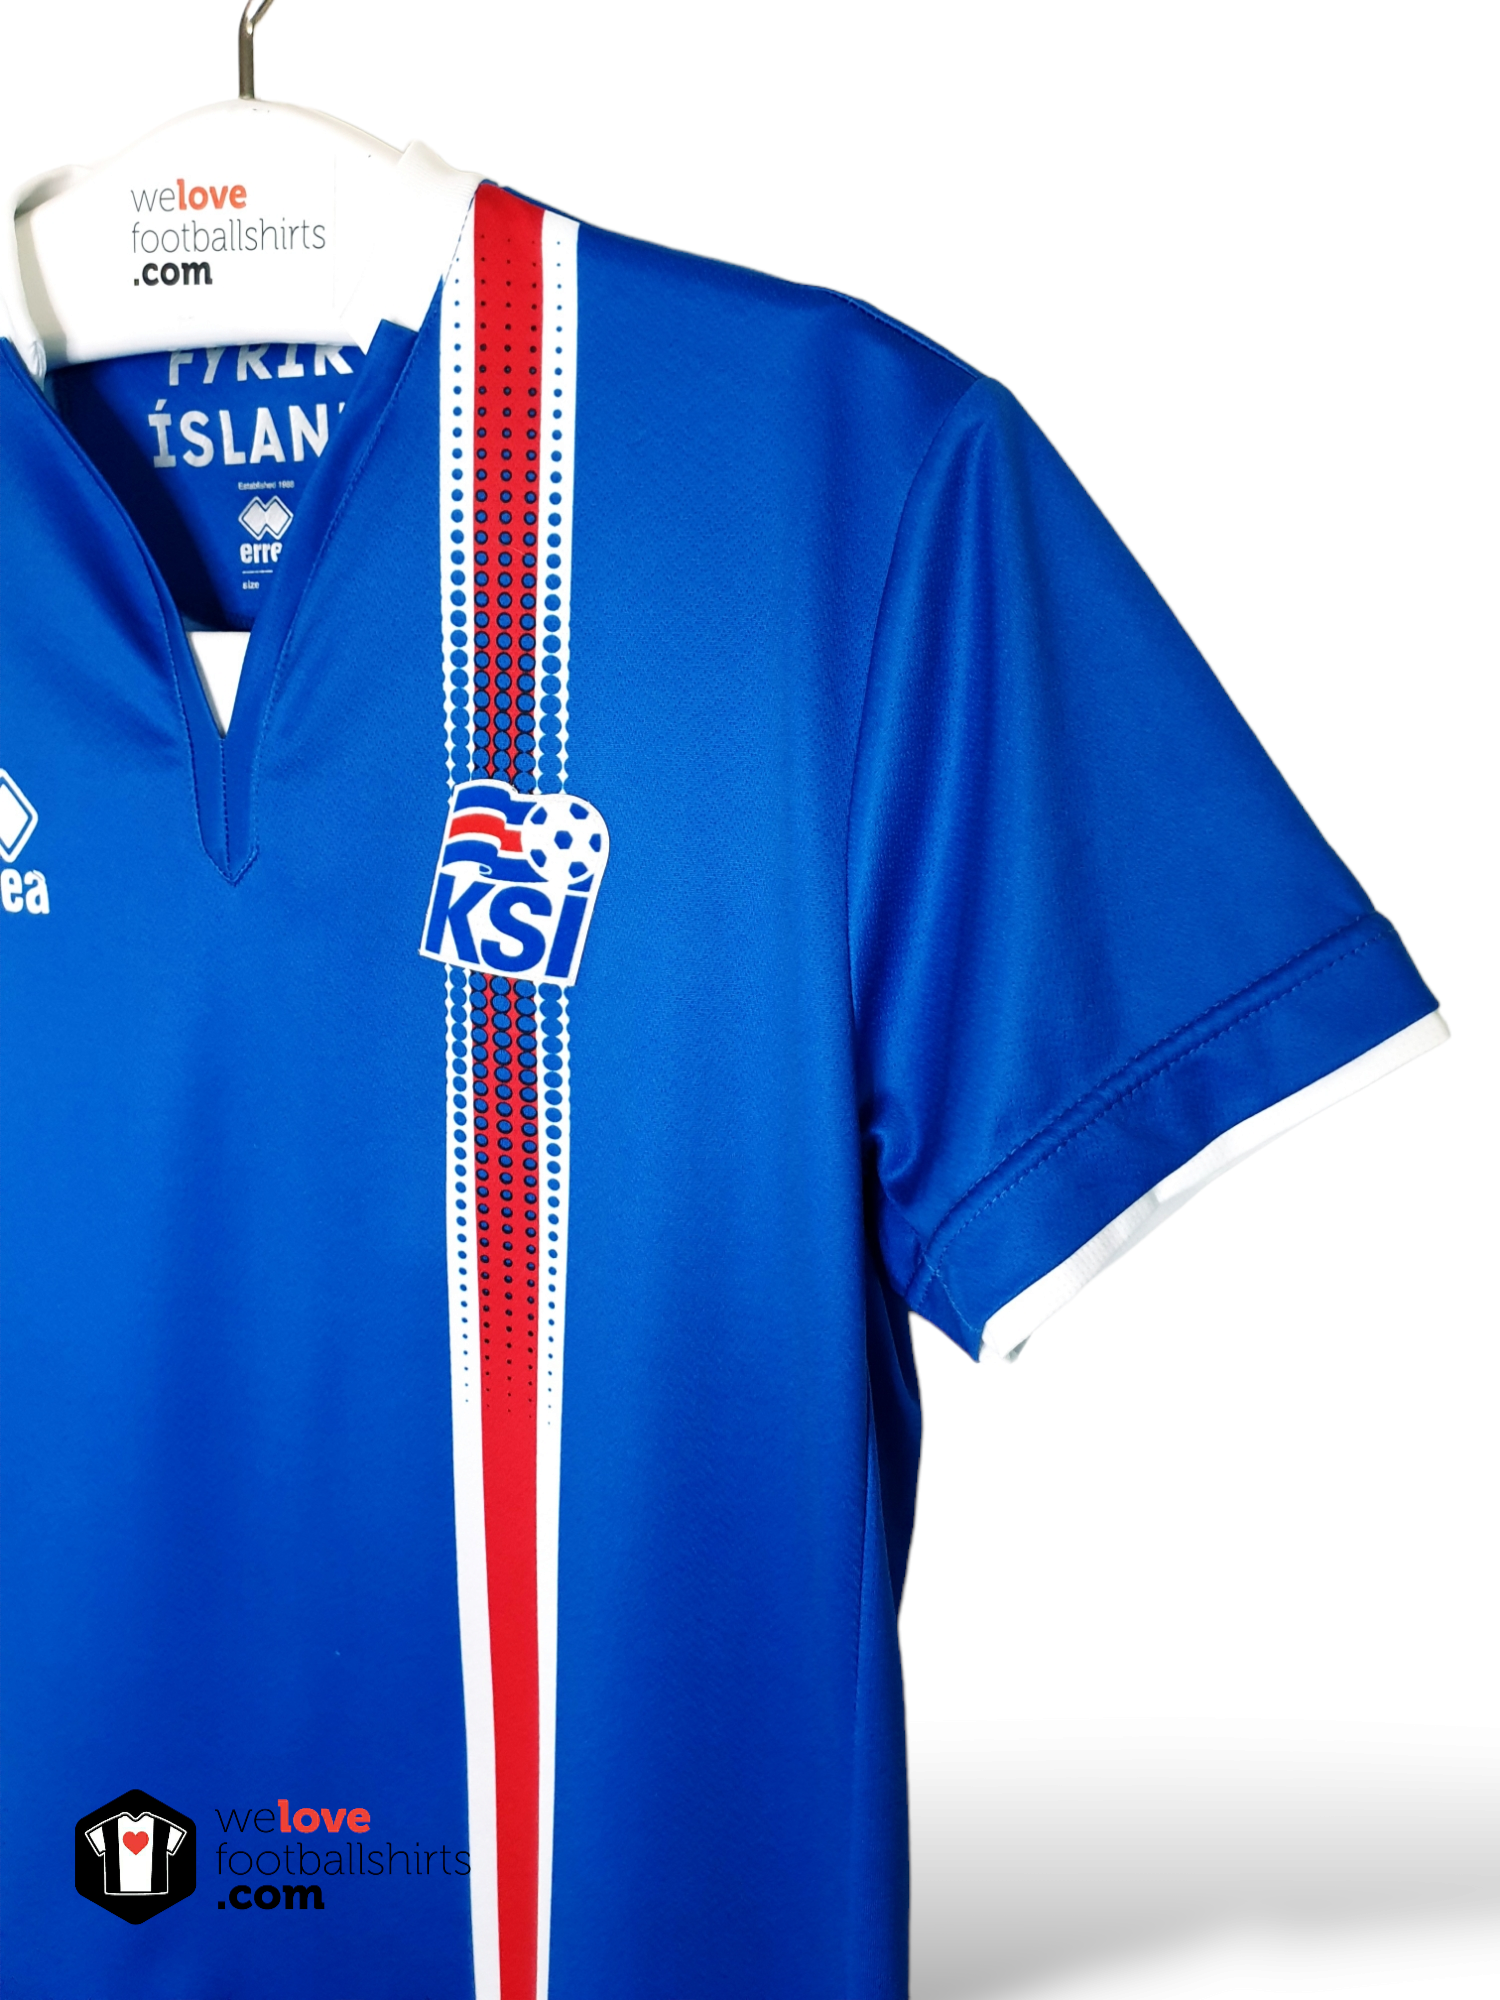 Iceland Home football shirt 2016 - 2017.